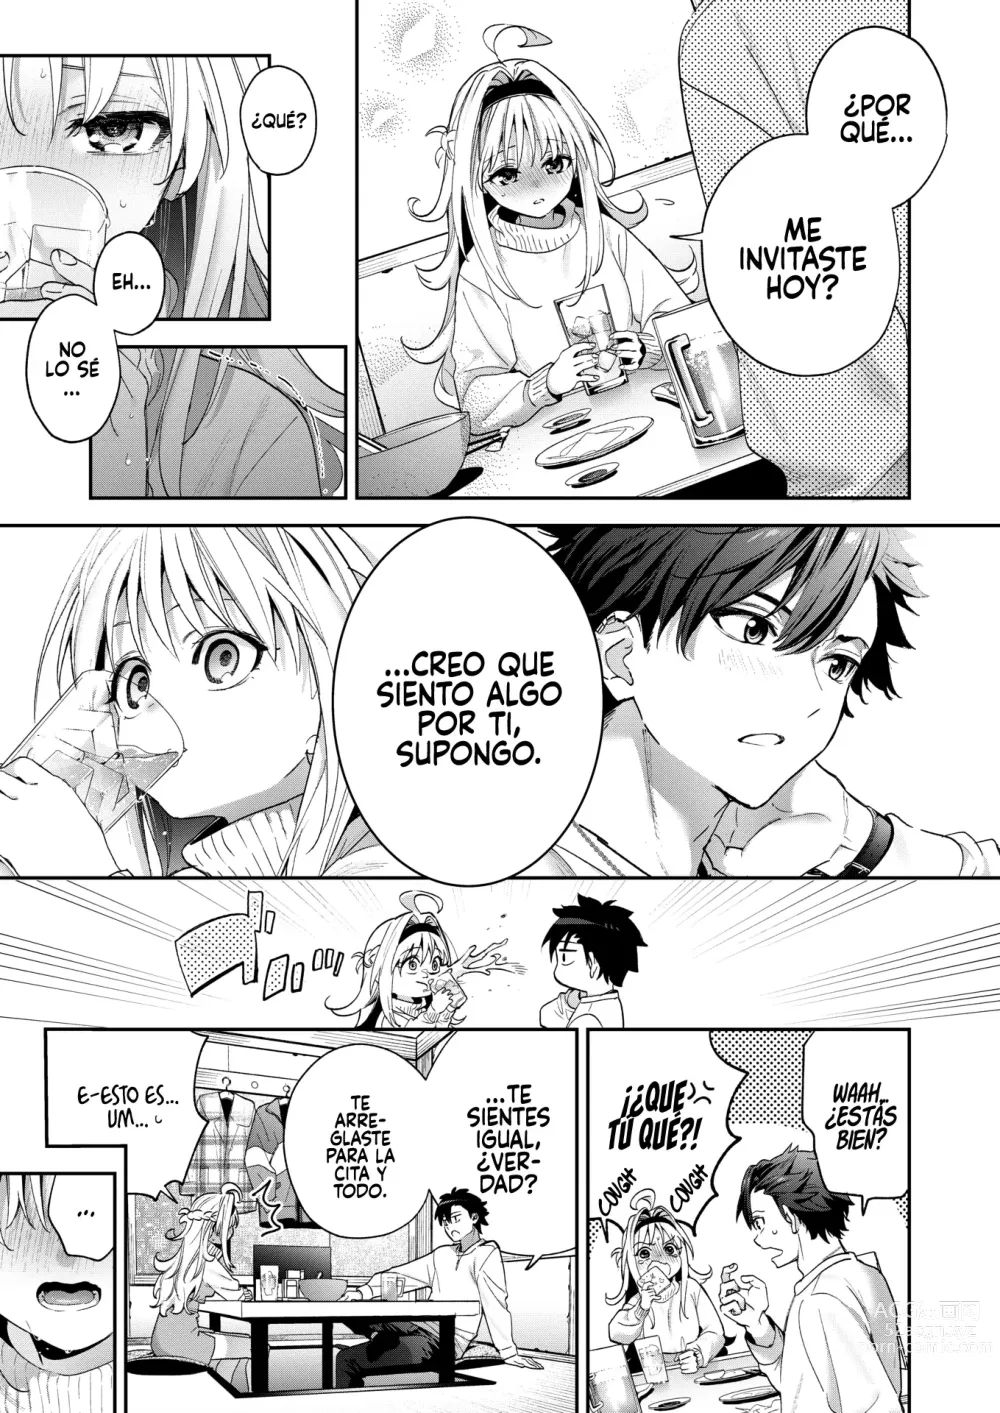 Page 9 of manga Melting Snow